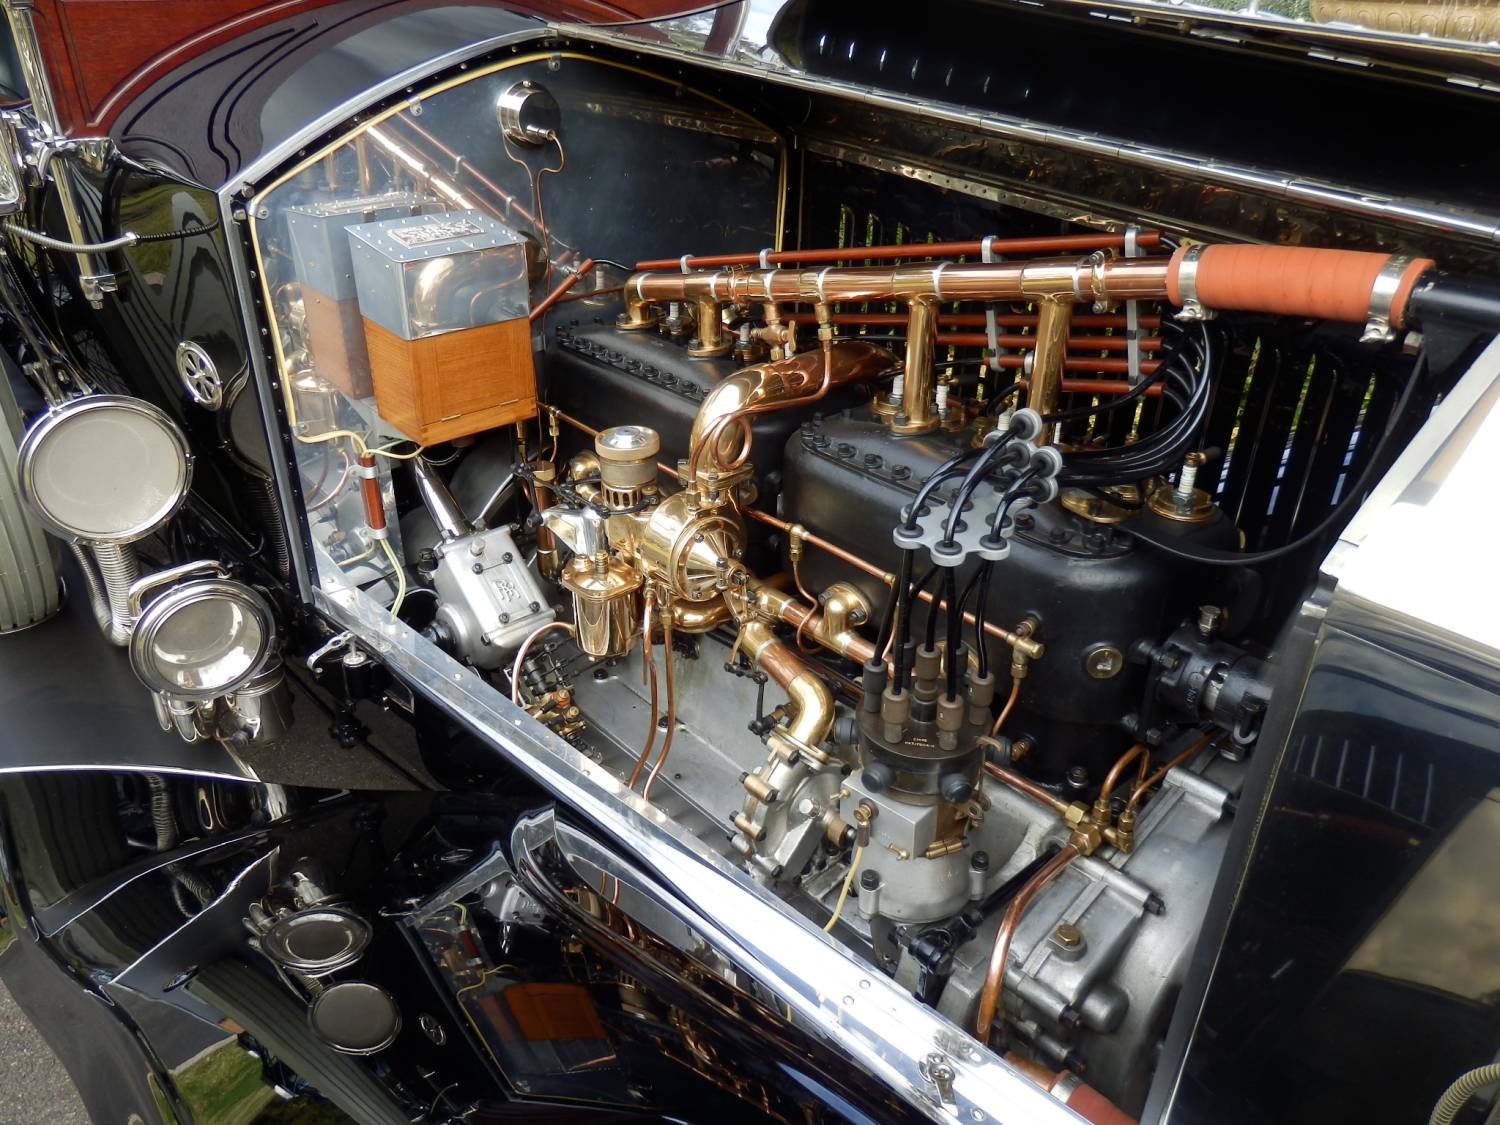 1913 Rolls-Royce Silver Ghost London to Edinburgh